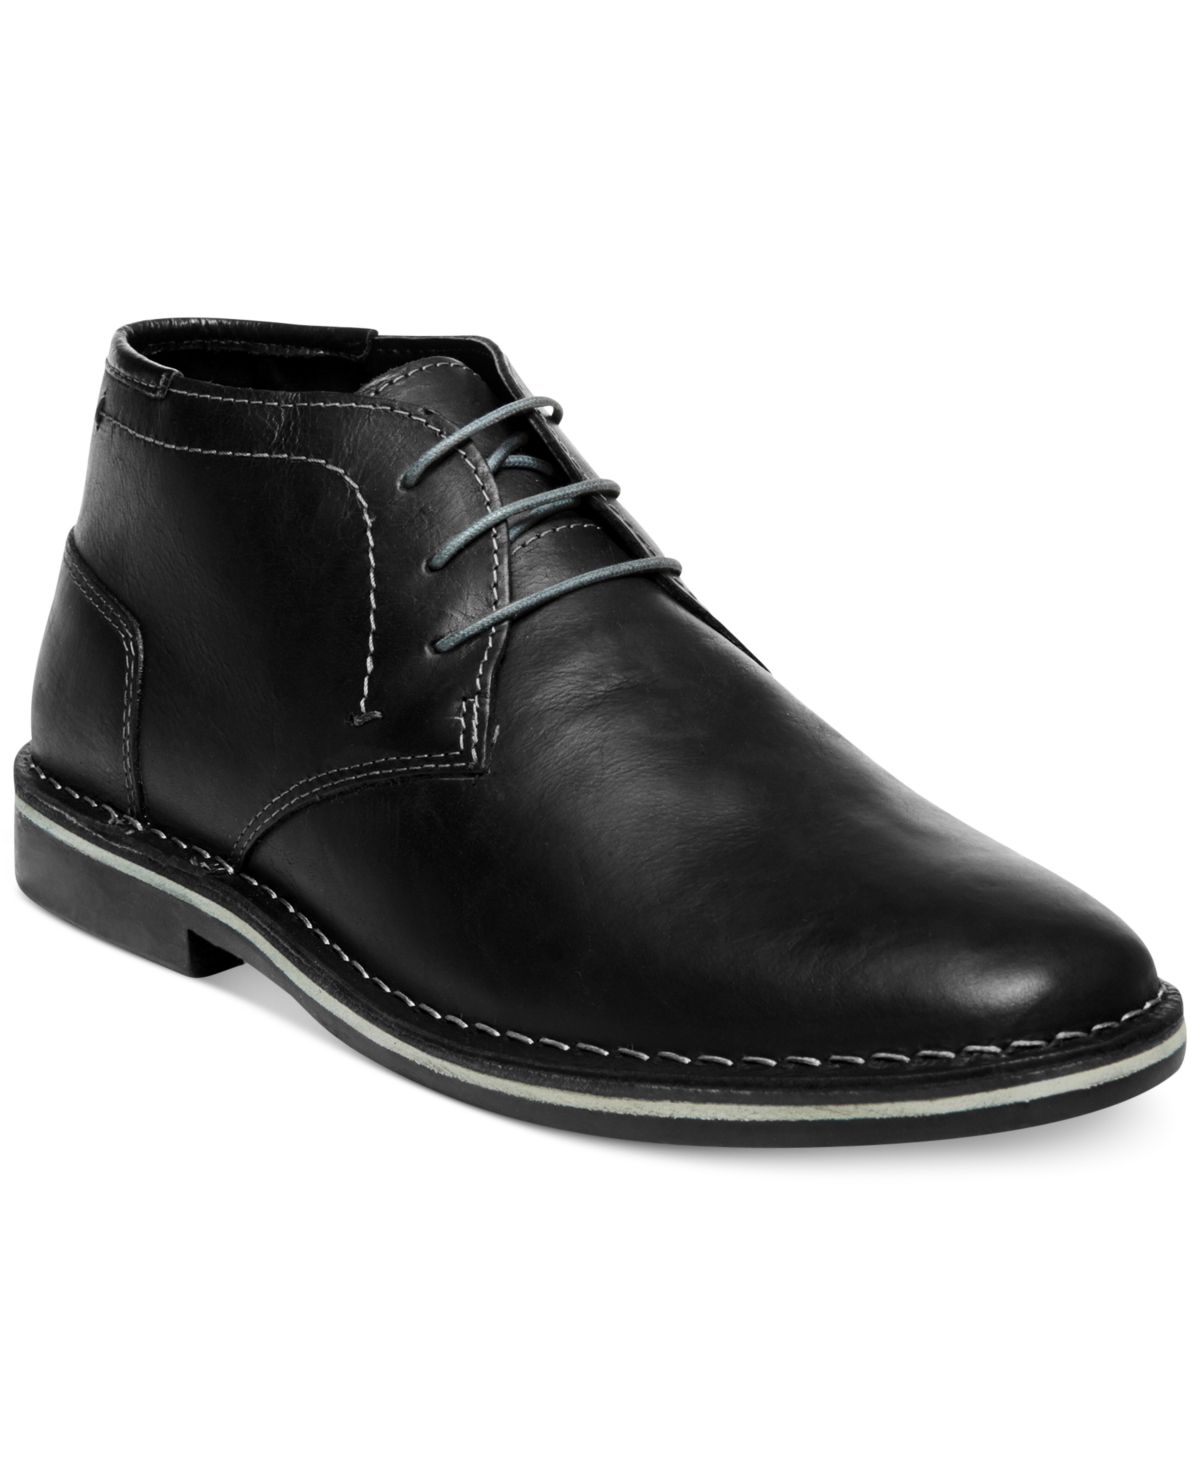 Men's Harken Chukka Boots - Black